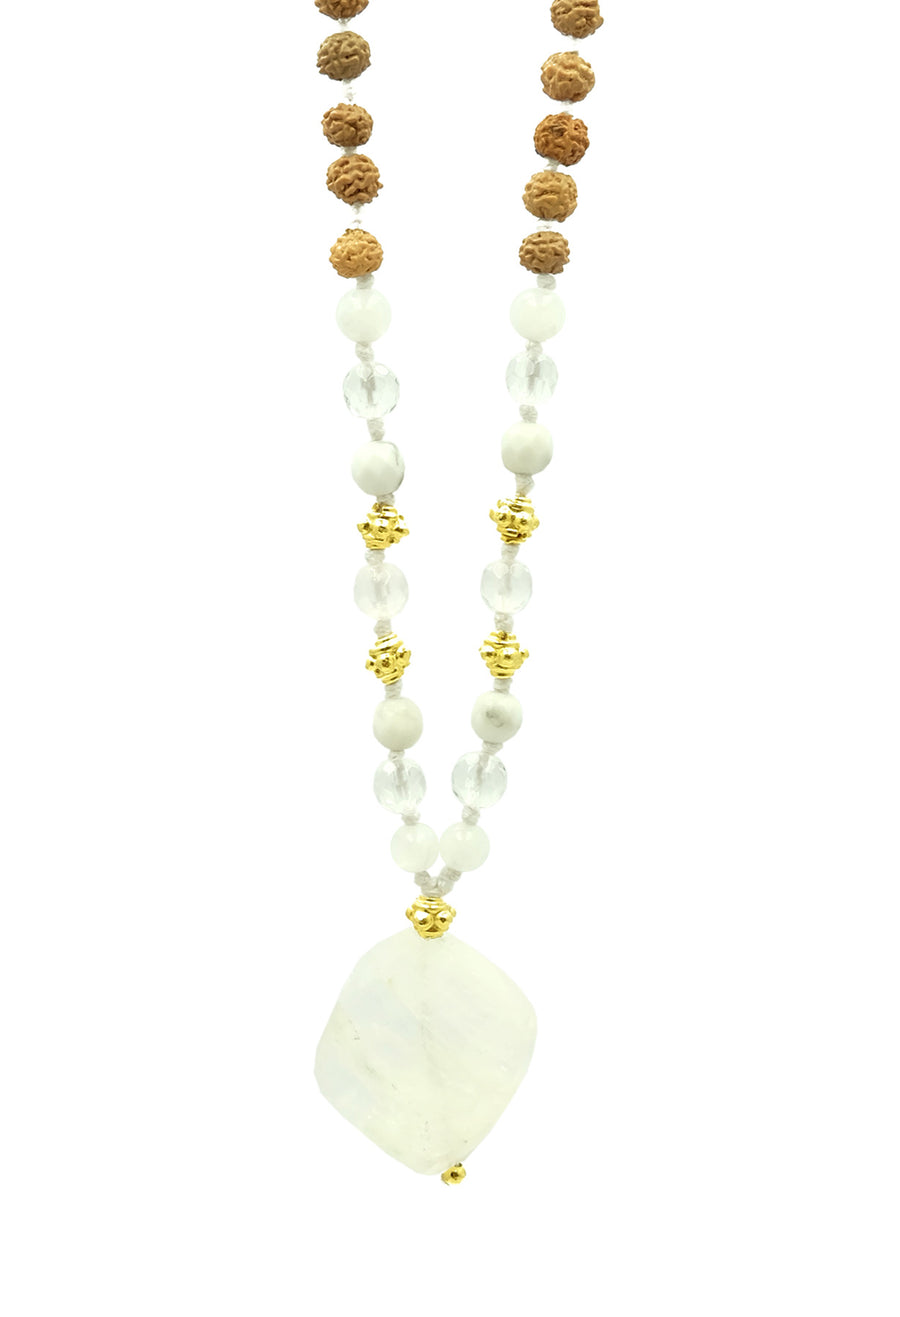 Divine Luminary is a choker length necklace handmade by balimalas.com from rudraksha seeds, quartz crystal, howlite beads and a howlite pendant.